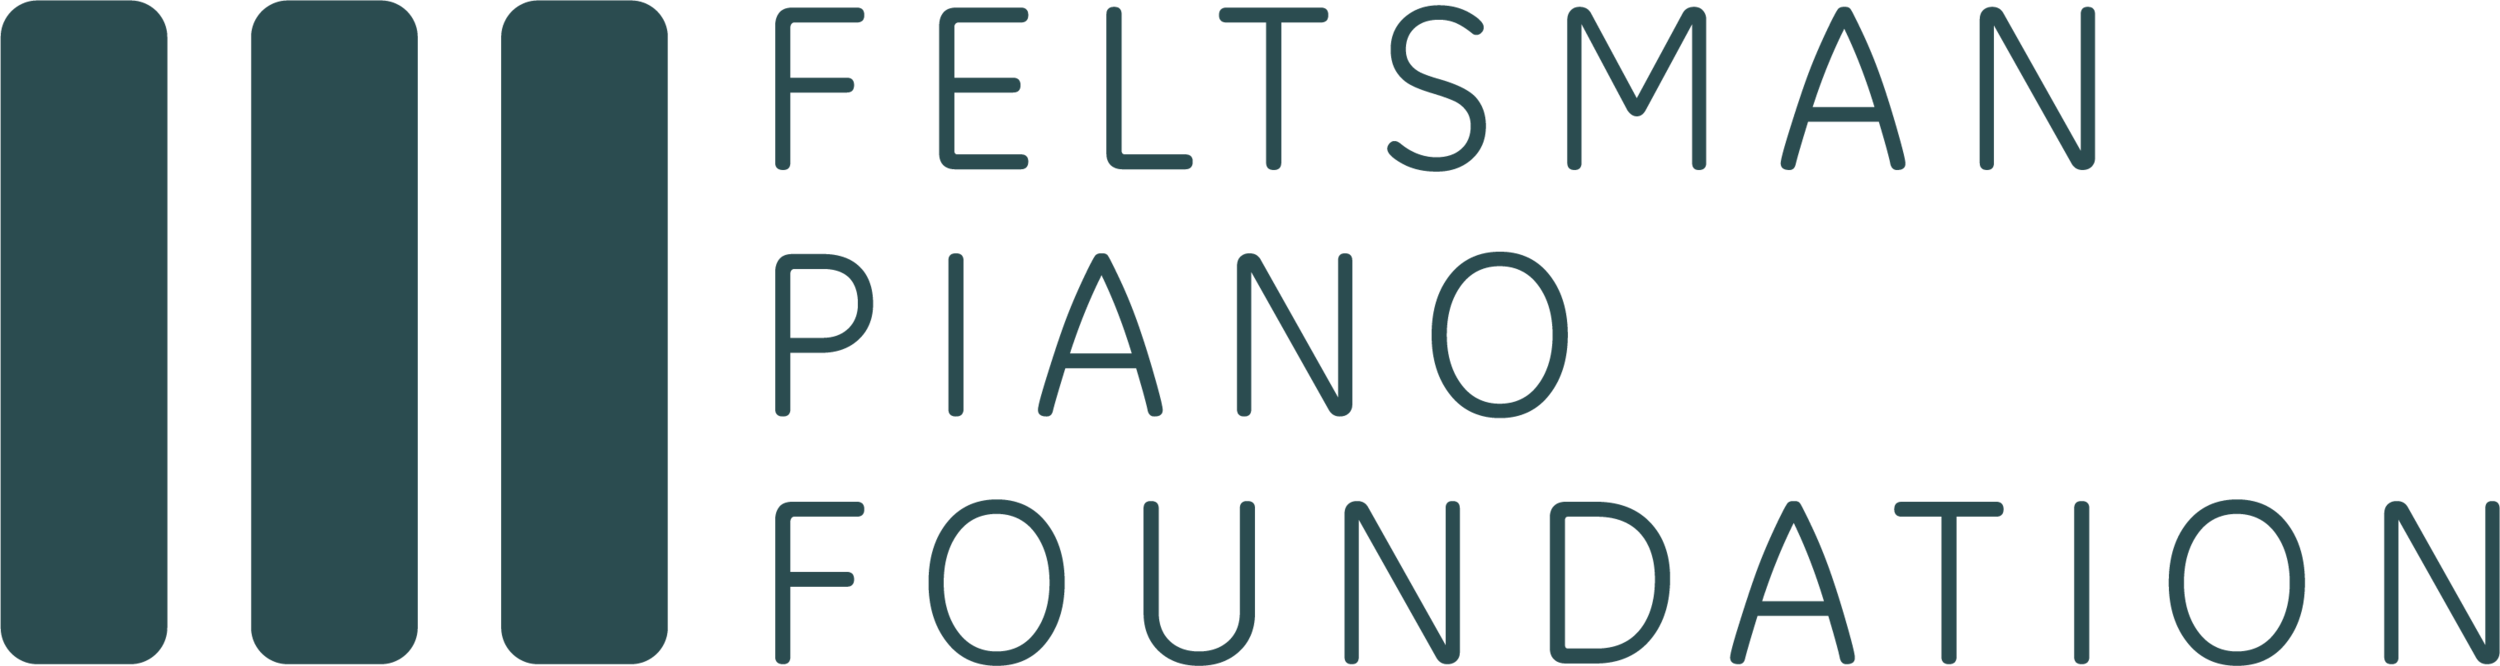 Feltsman Piano Foundation